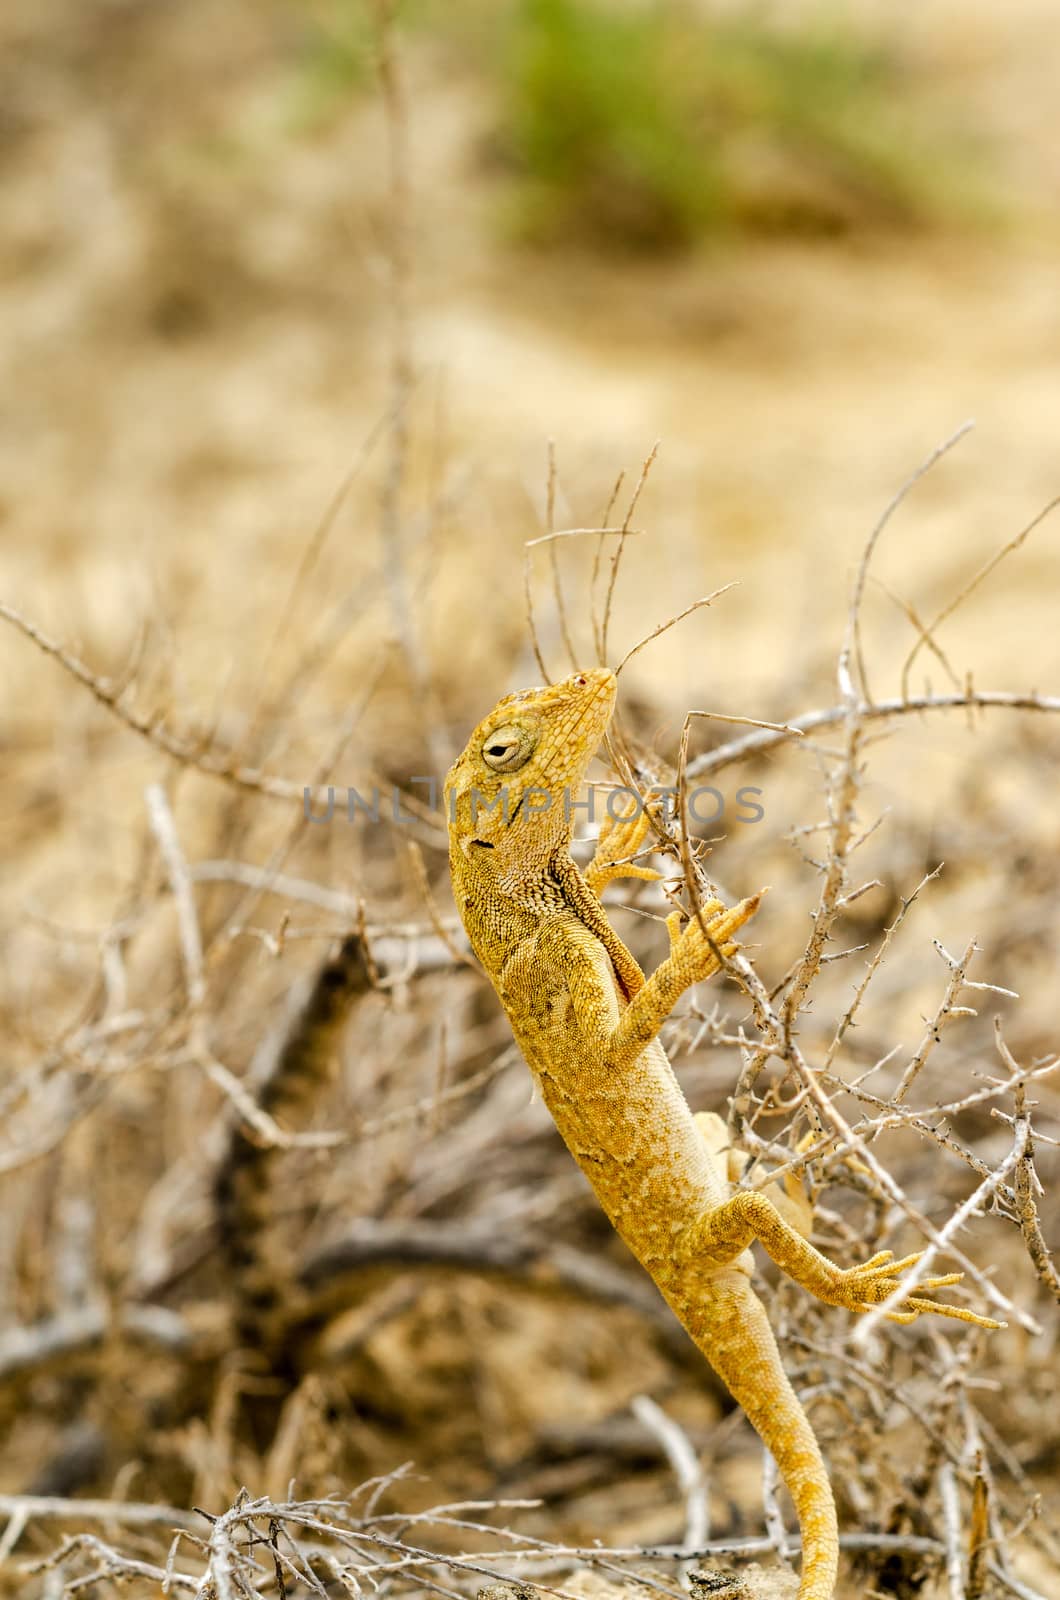 Small Yellow Lizard by jkraft5